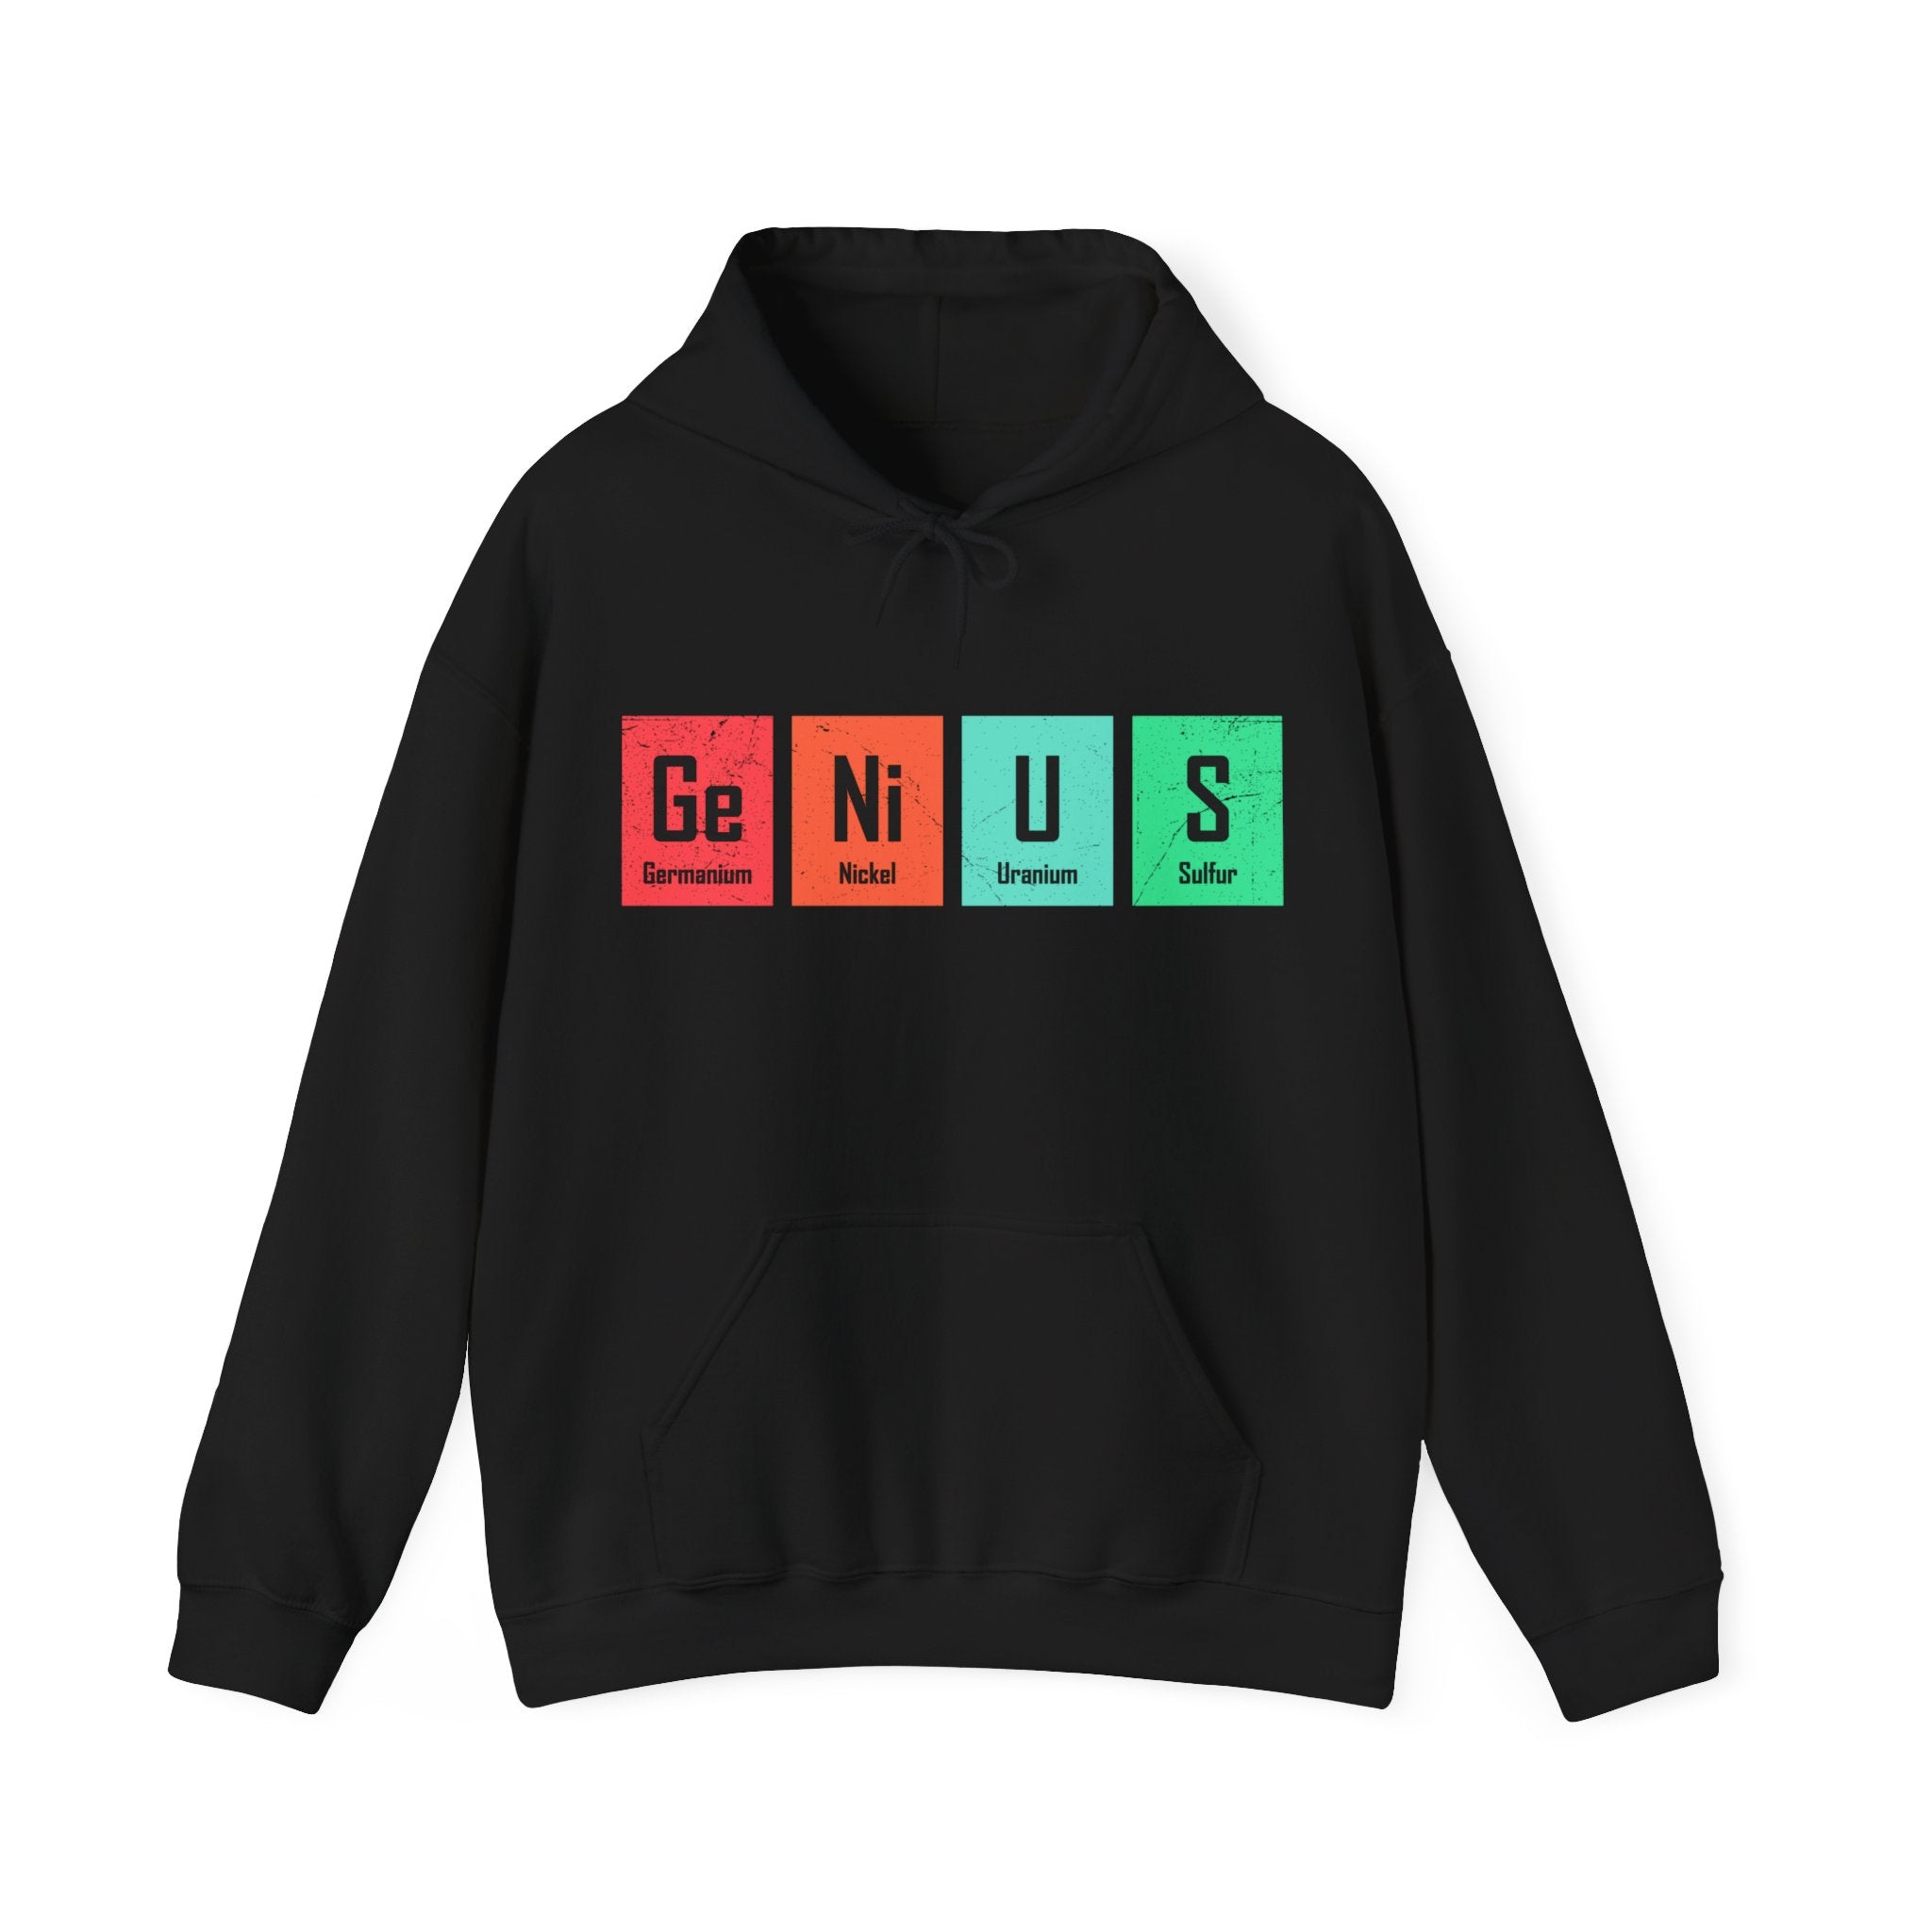 Ge-Ni-U-S - Hooded Sweatshirt featuring periodic table elements arranged to spell "Genius" with Germanium (Ge), Nickel (Ni), Uranium (U), and Sulfur (S). Enjoy the comfy feel while flaunting your Ge-Ni-U-S design.